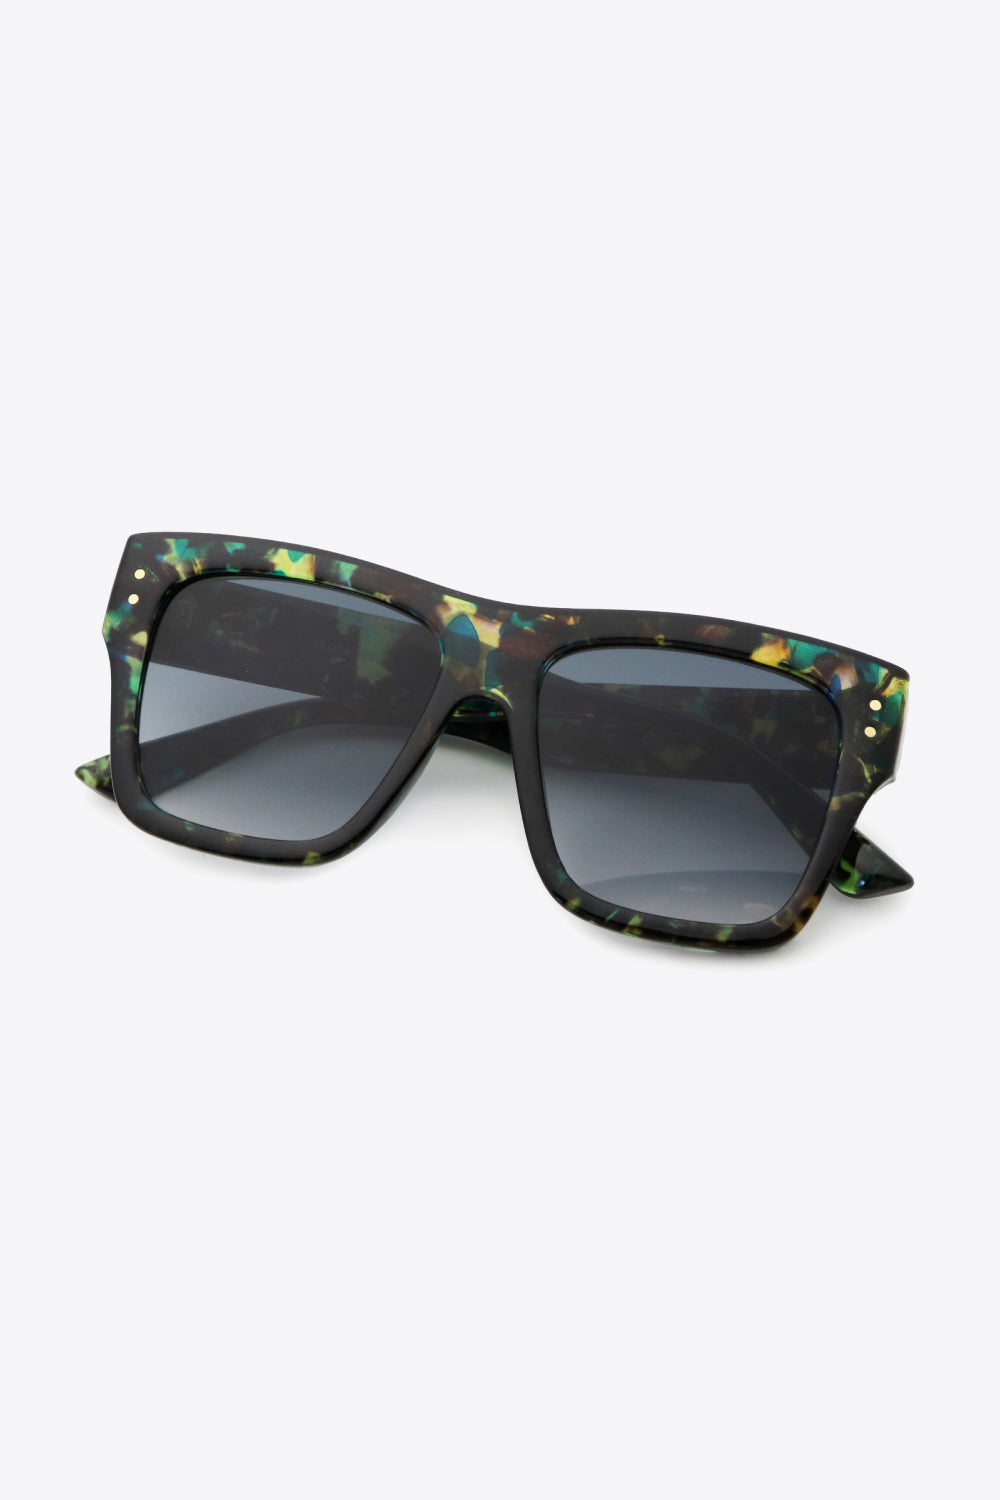 UV400 Patterned Polycarbonate Square Sunglasses - bertofonsi